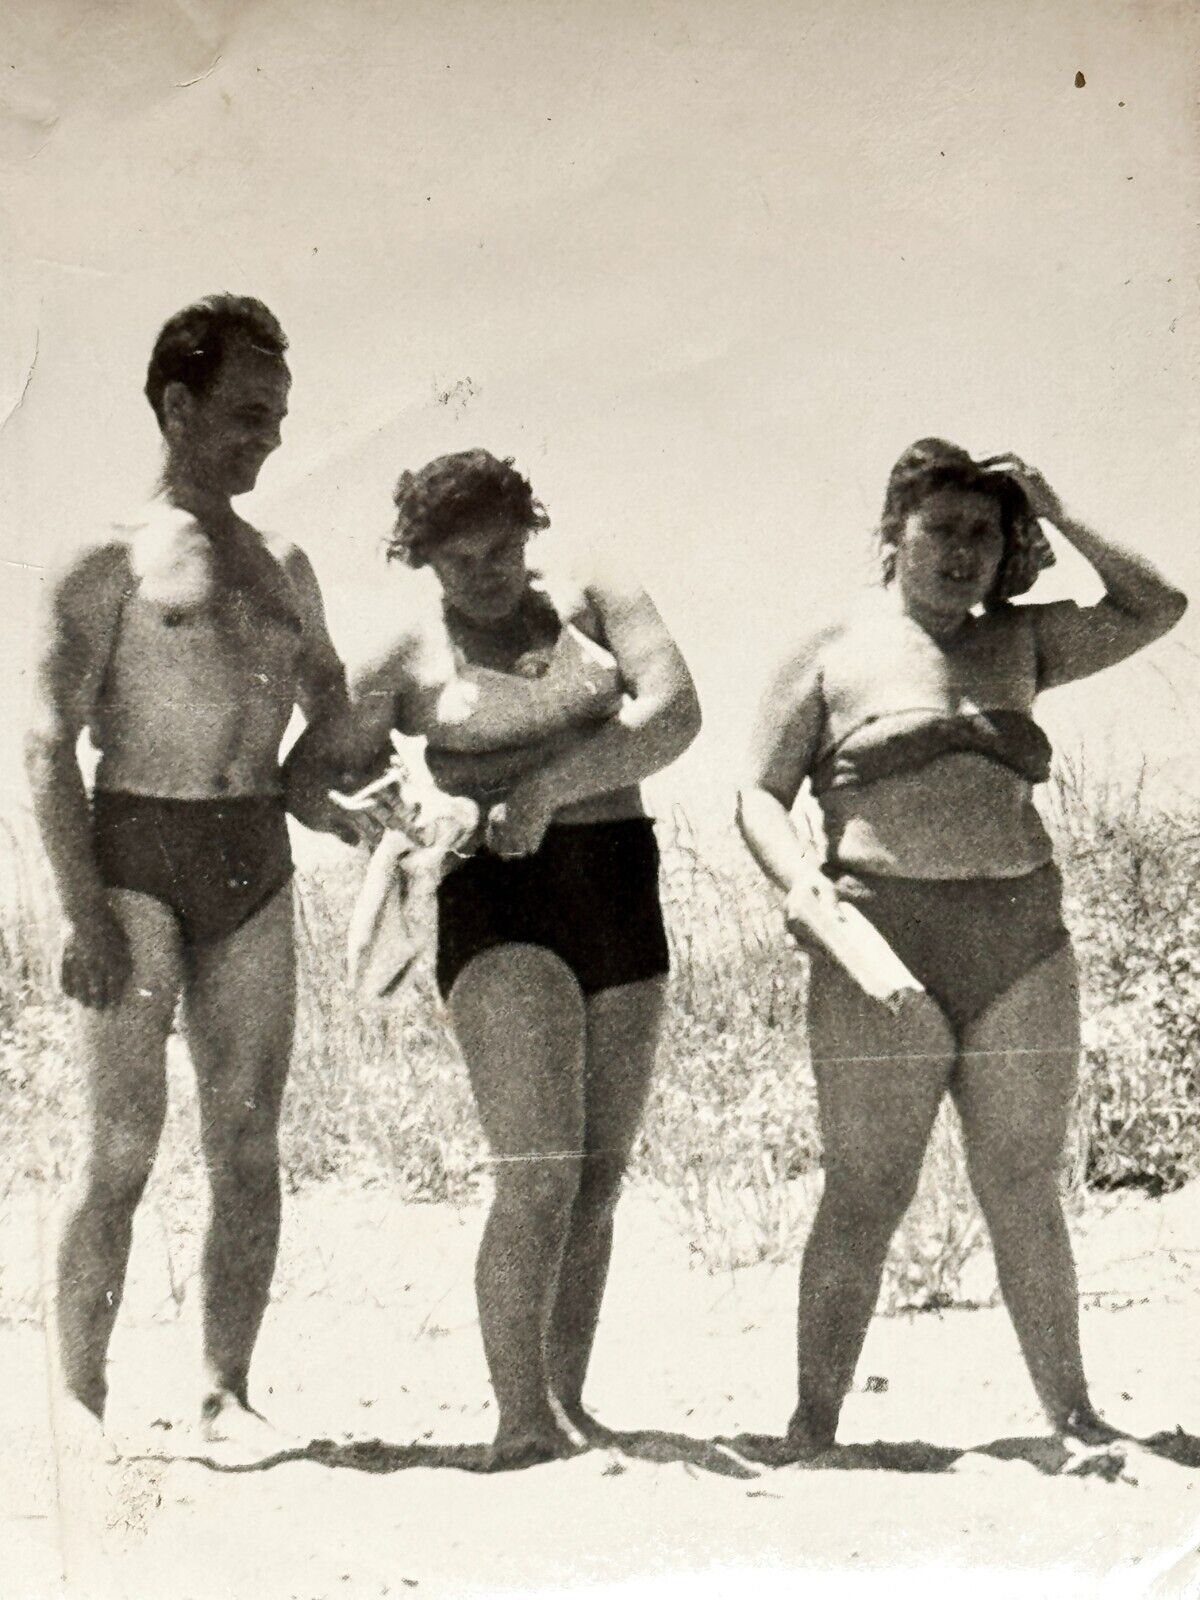 1950s Plus size Chubby Two Women Bikini Snapshot Man Bulge Trunks Vintage Photo